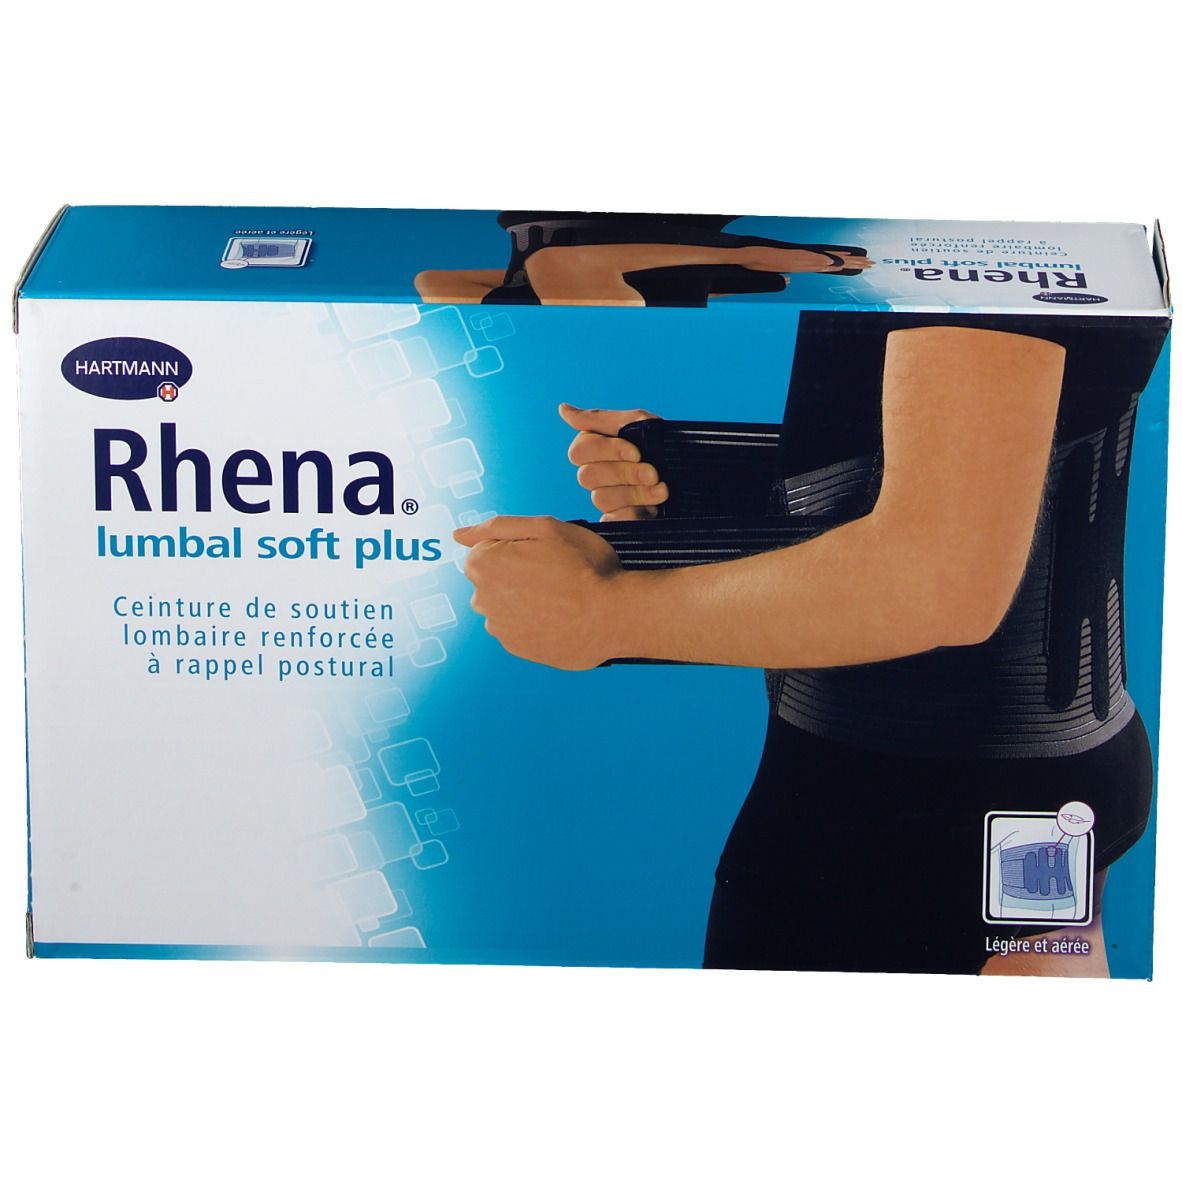 Rhena® lumbal soft plus Taille 3 H21